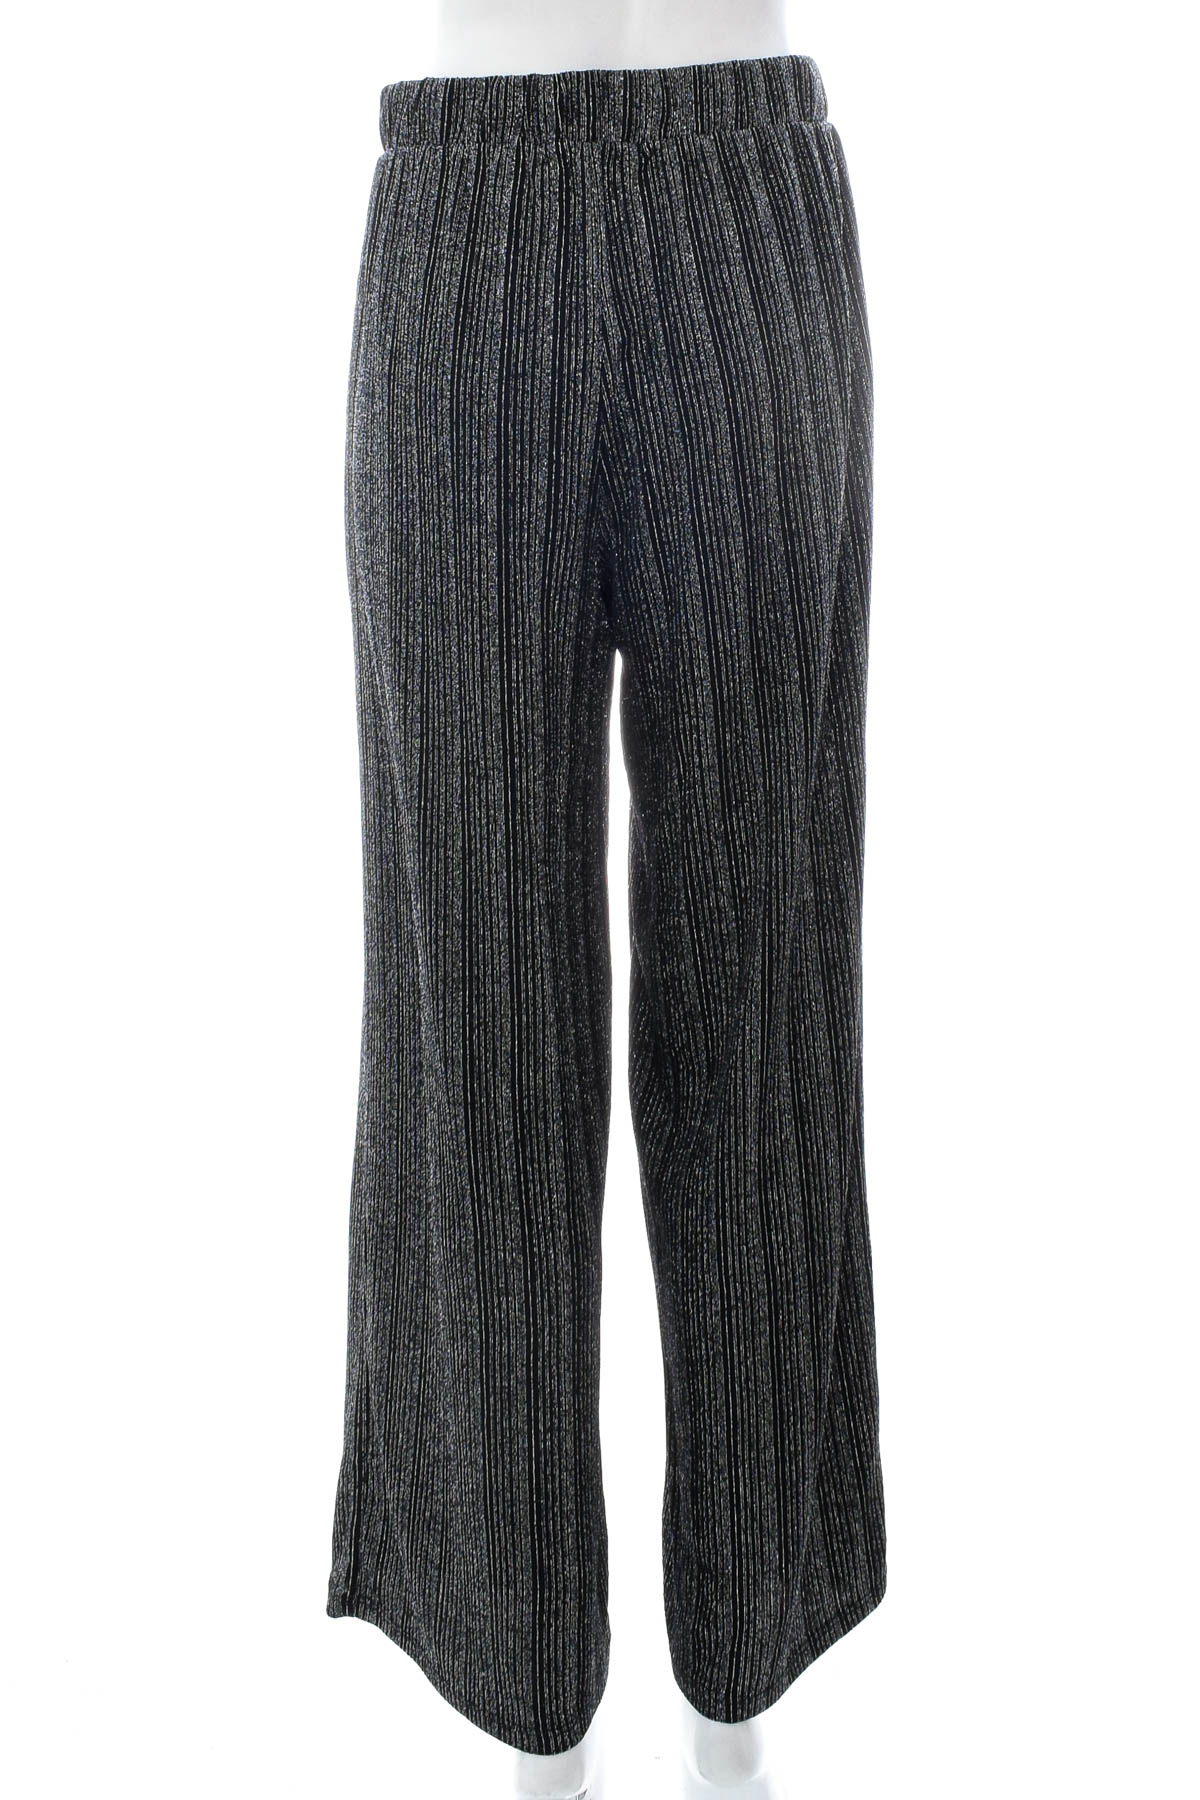 Women's trousers - VERO MODA - 1